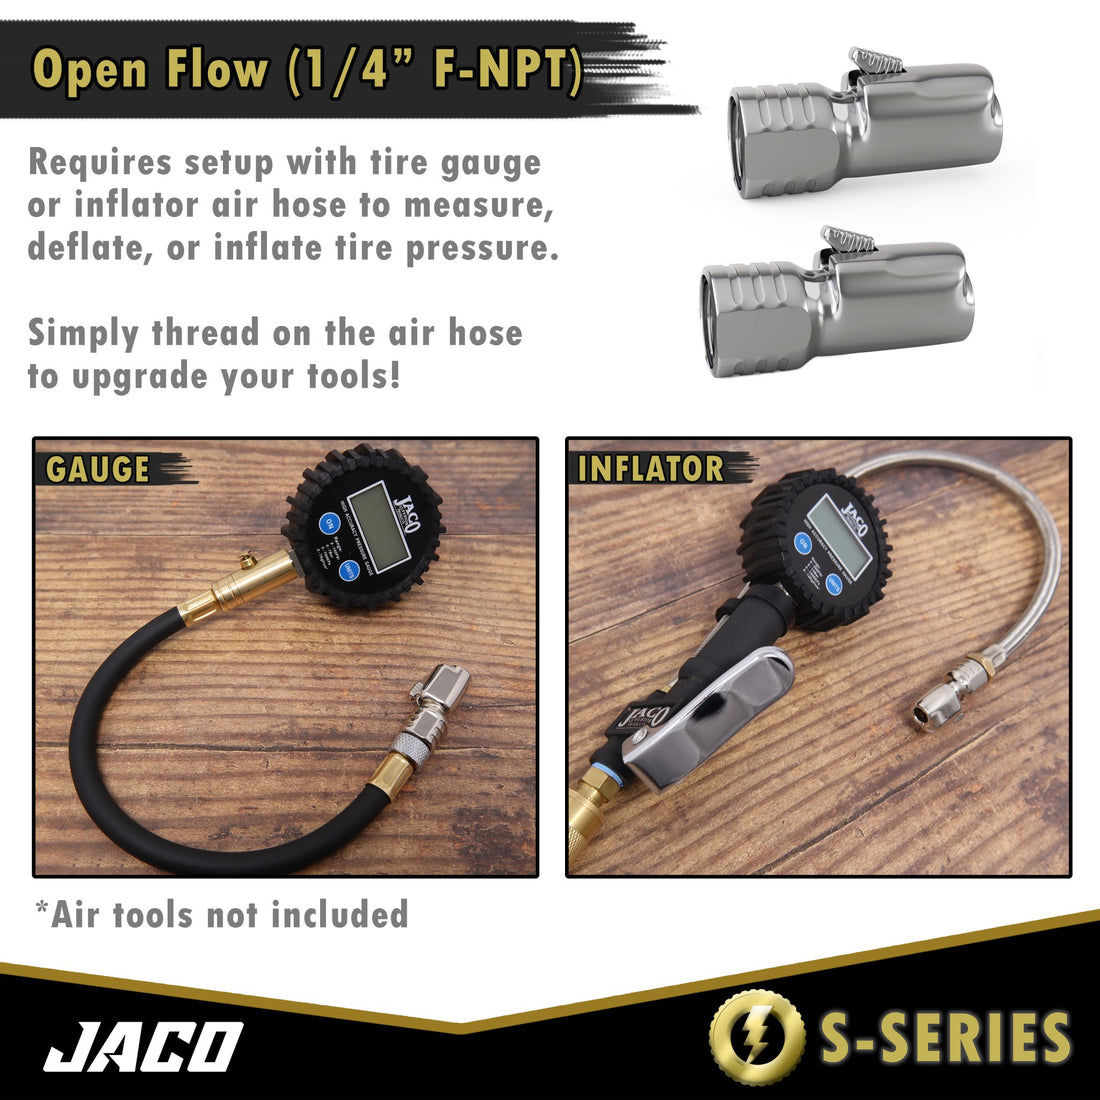 Lightning™ S-Series Tire Air Chuck | Open Flow, 1/4" F-NPT (2 Pack) - Diesel Freak